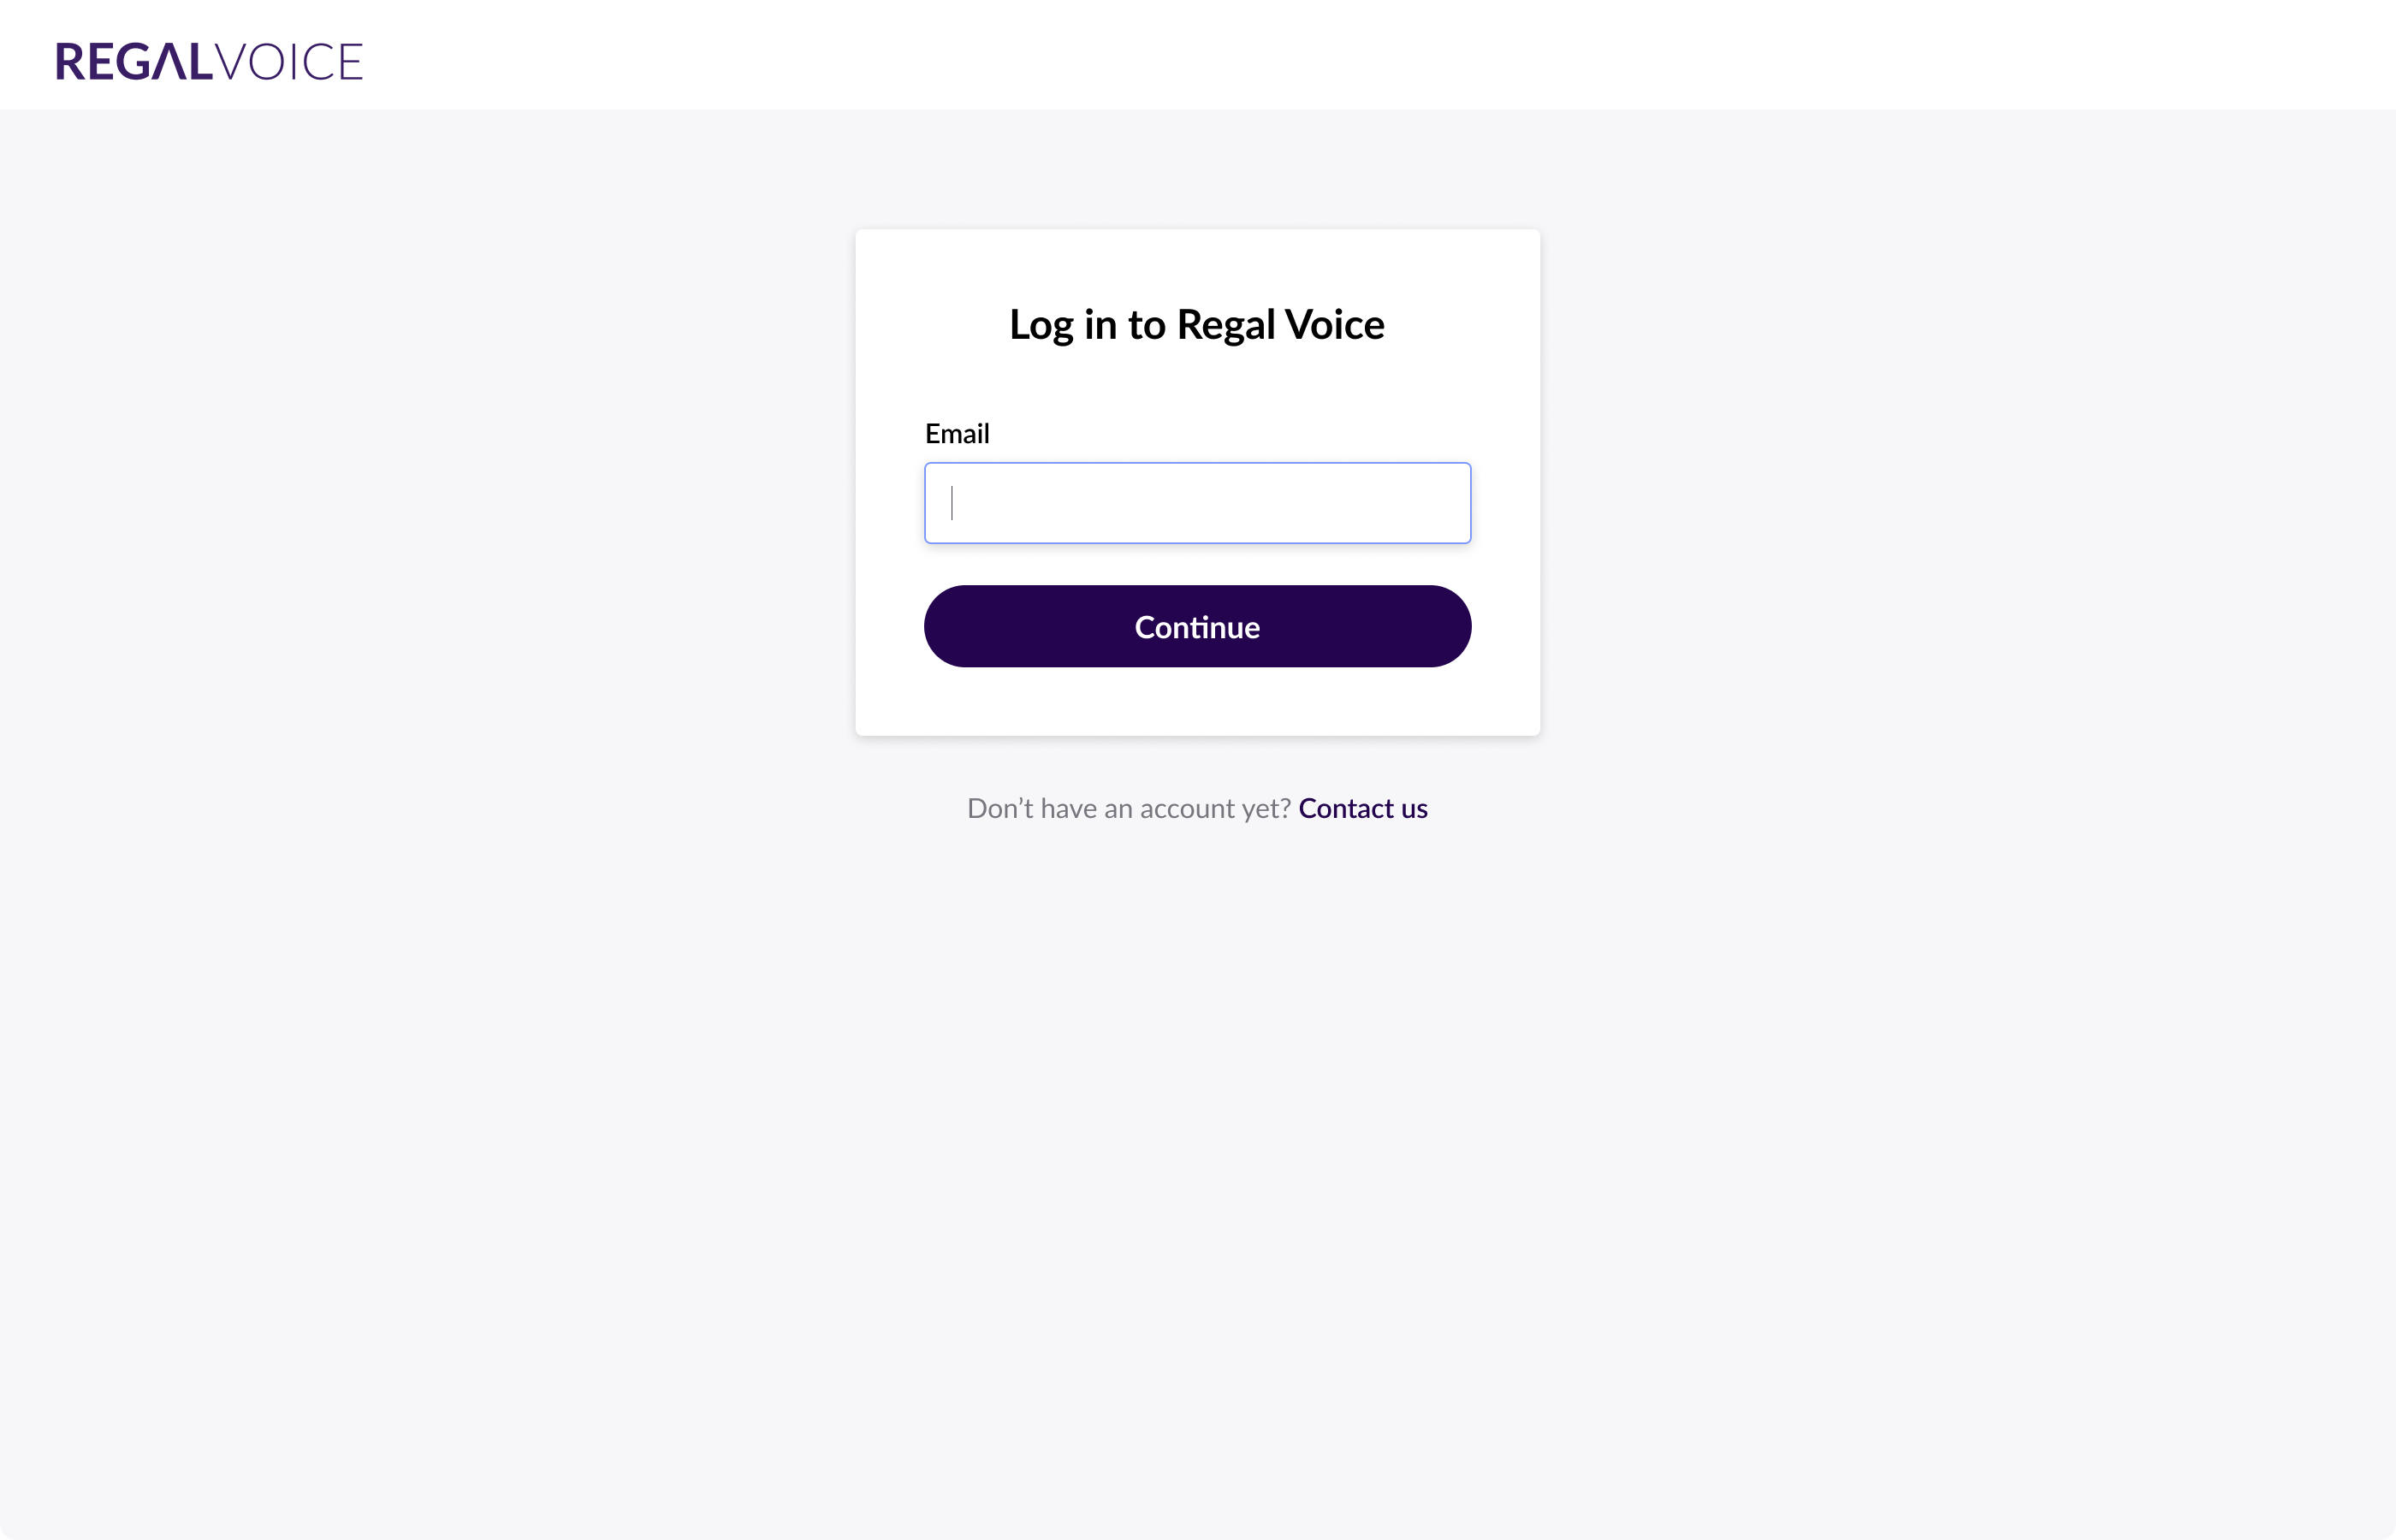 Enter Email at app.regalvoice.com